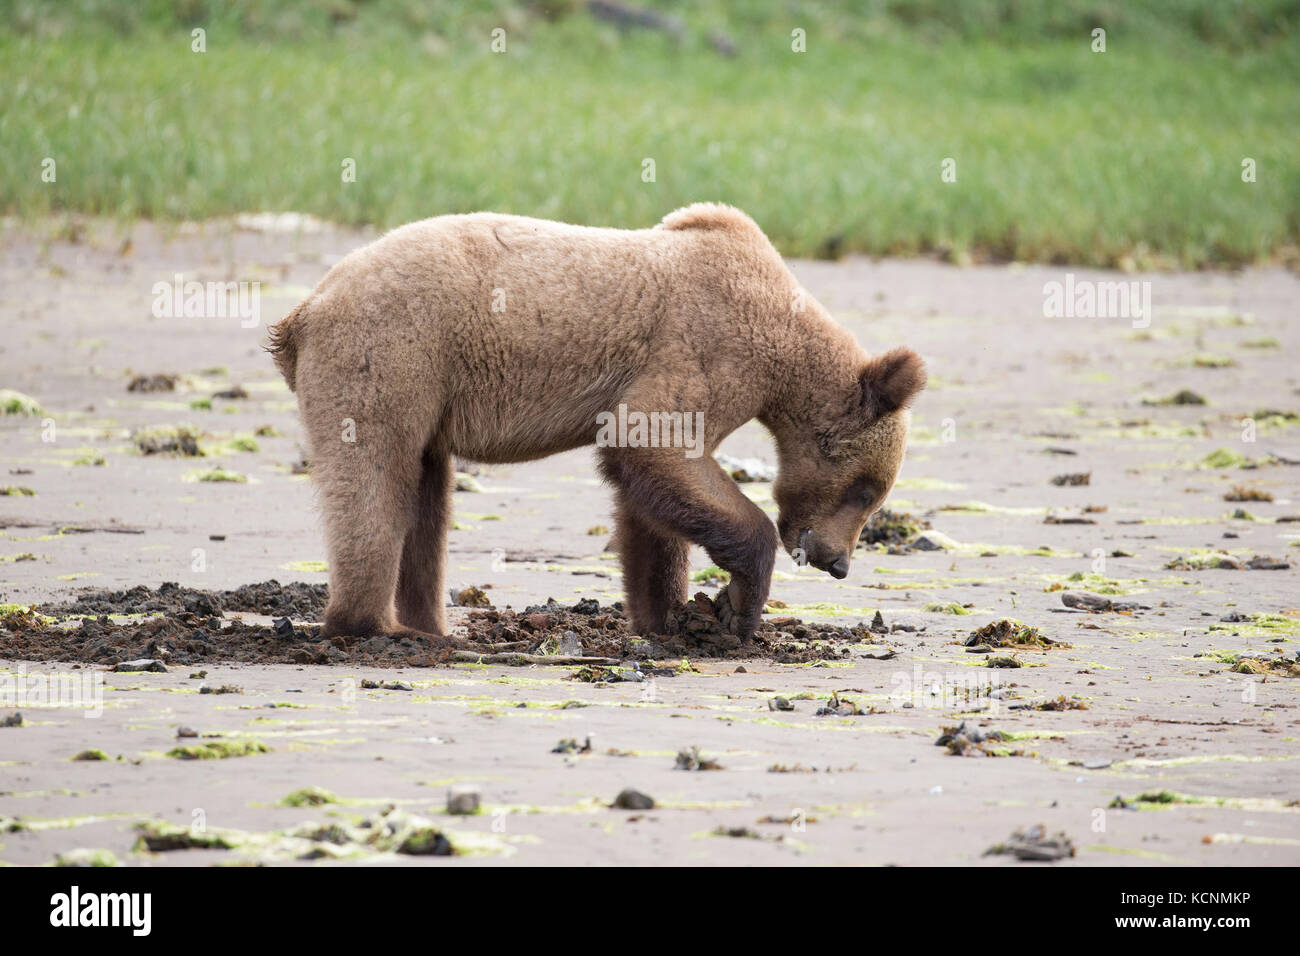 Grizzly bear (Ursus arctos horriblis), subadult, foraging for clams, Khutzeymateen Grizzly Bear Sanctuary, British Columbia, Canada. Stock Photo